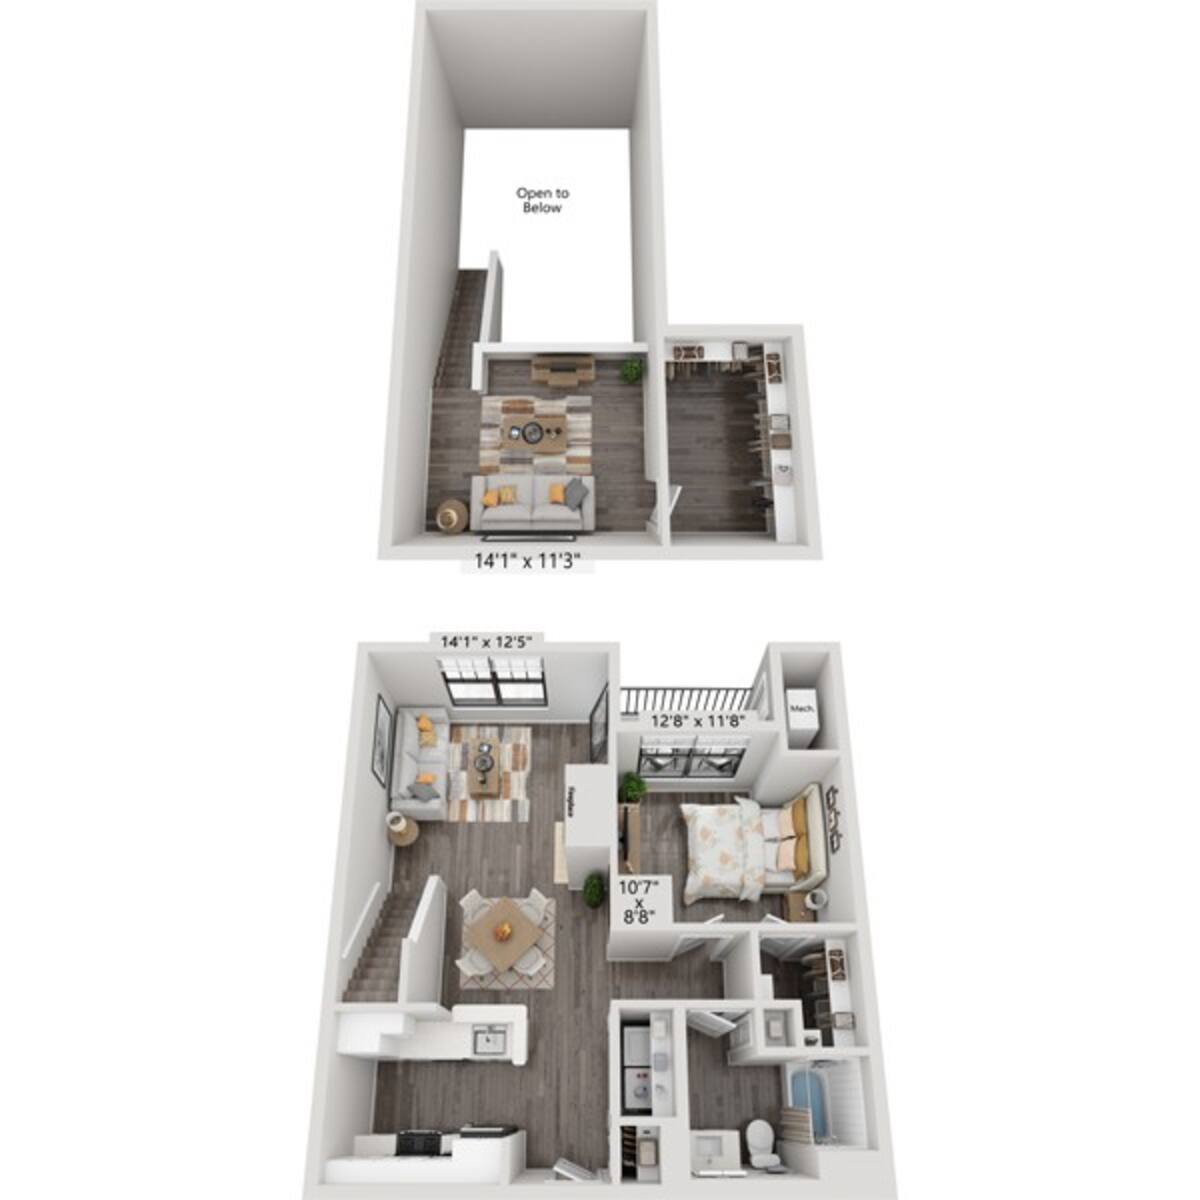 Floorplan diagram for One Bedroom A1G2L, showing 1 bedroom